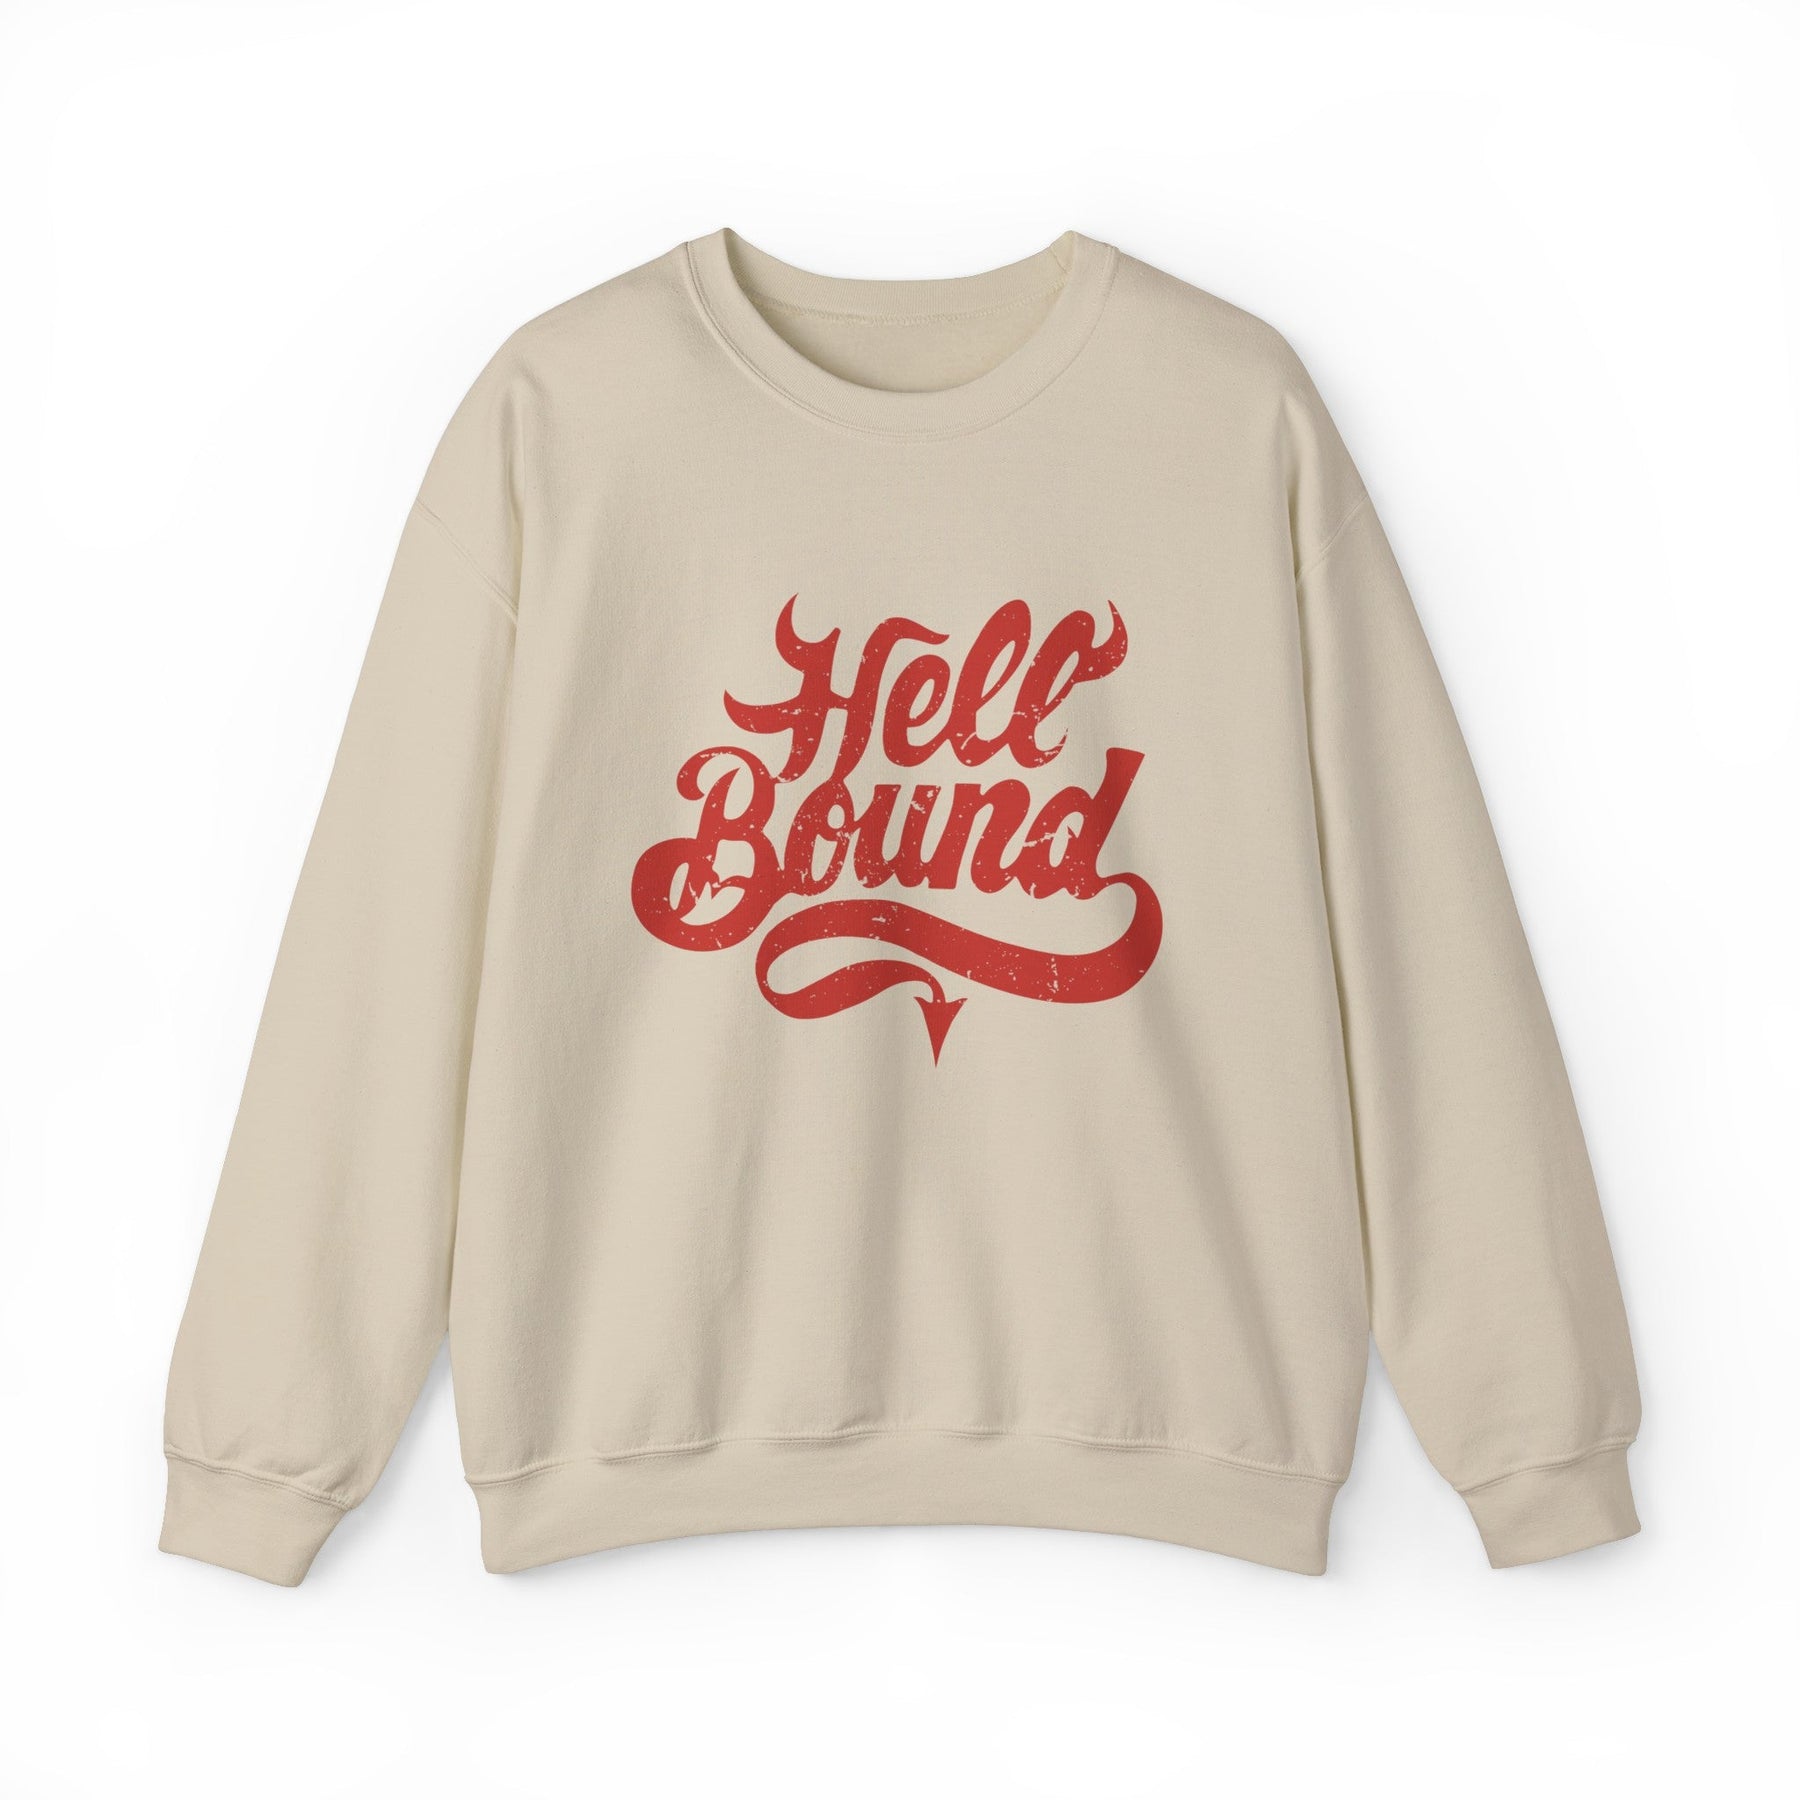 Hellbound Long Sleeve Crew Neck Sweatshirt - Goth Cloth Co.Sweatshirt41607425851280997835